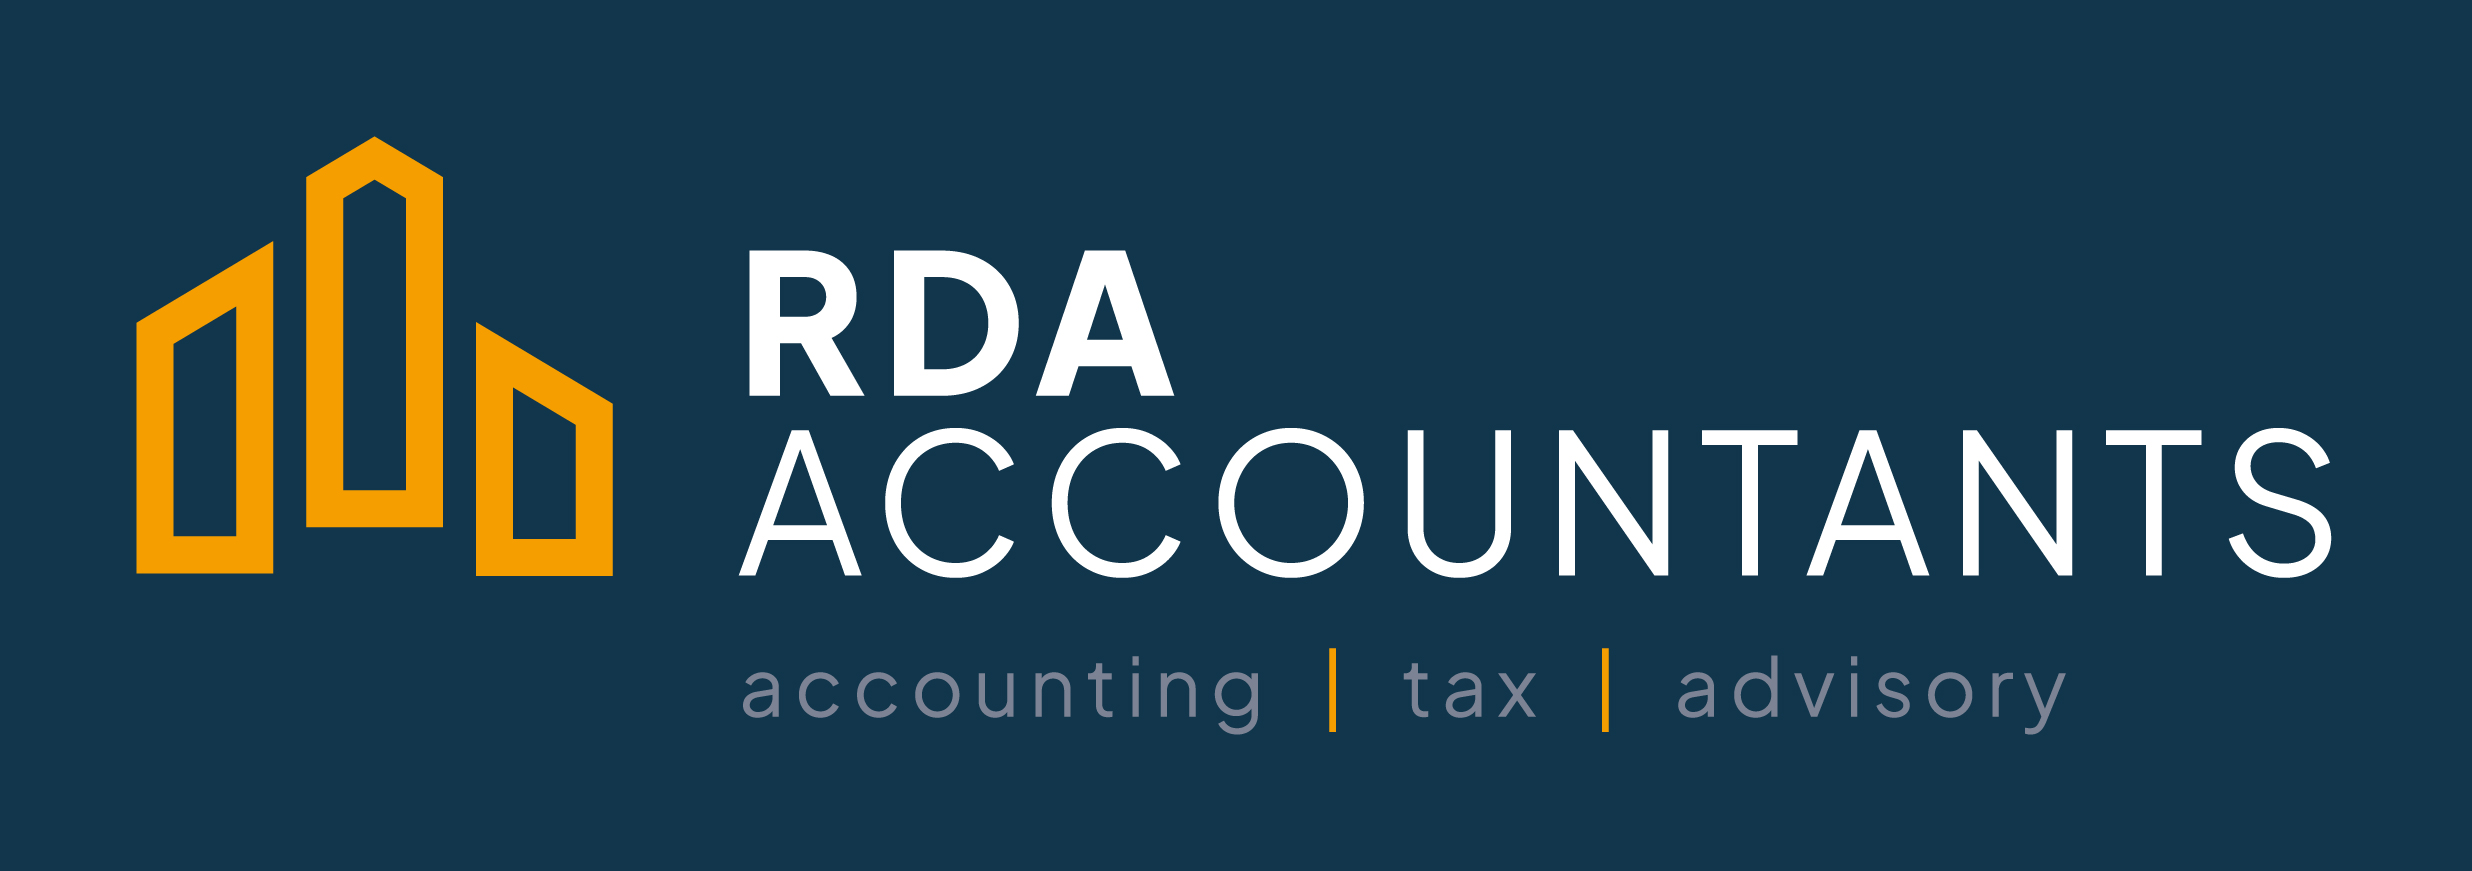 RDA Accountants Logo Tagline - Blue BG-3